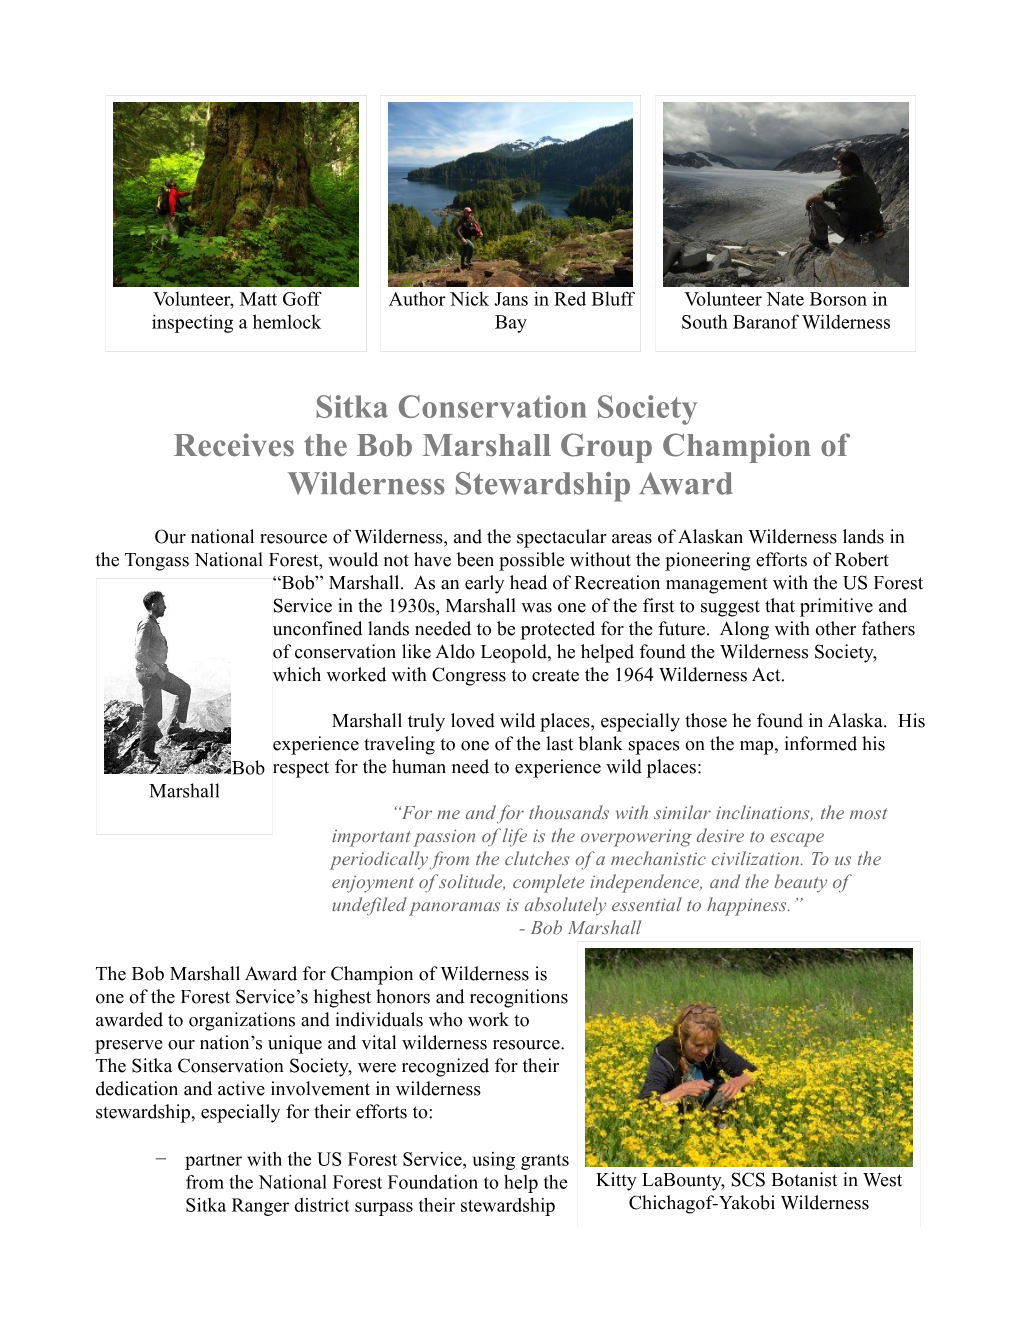 Sitka Conservation Society Receives the Bob Marshall Group Champion of Wilderness Stewardship Award